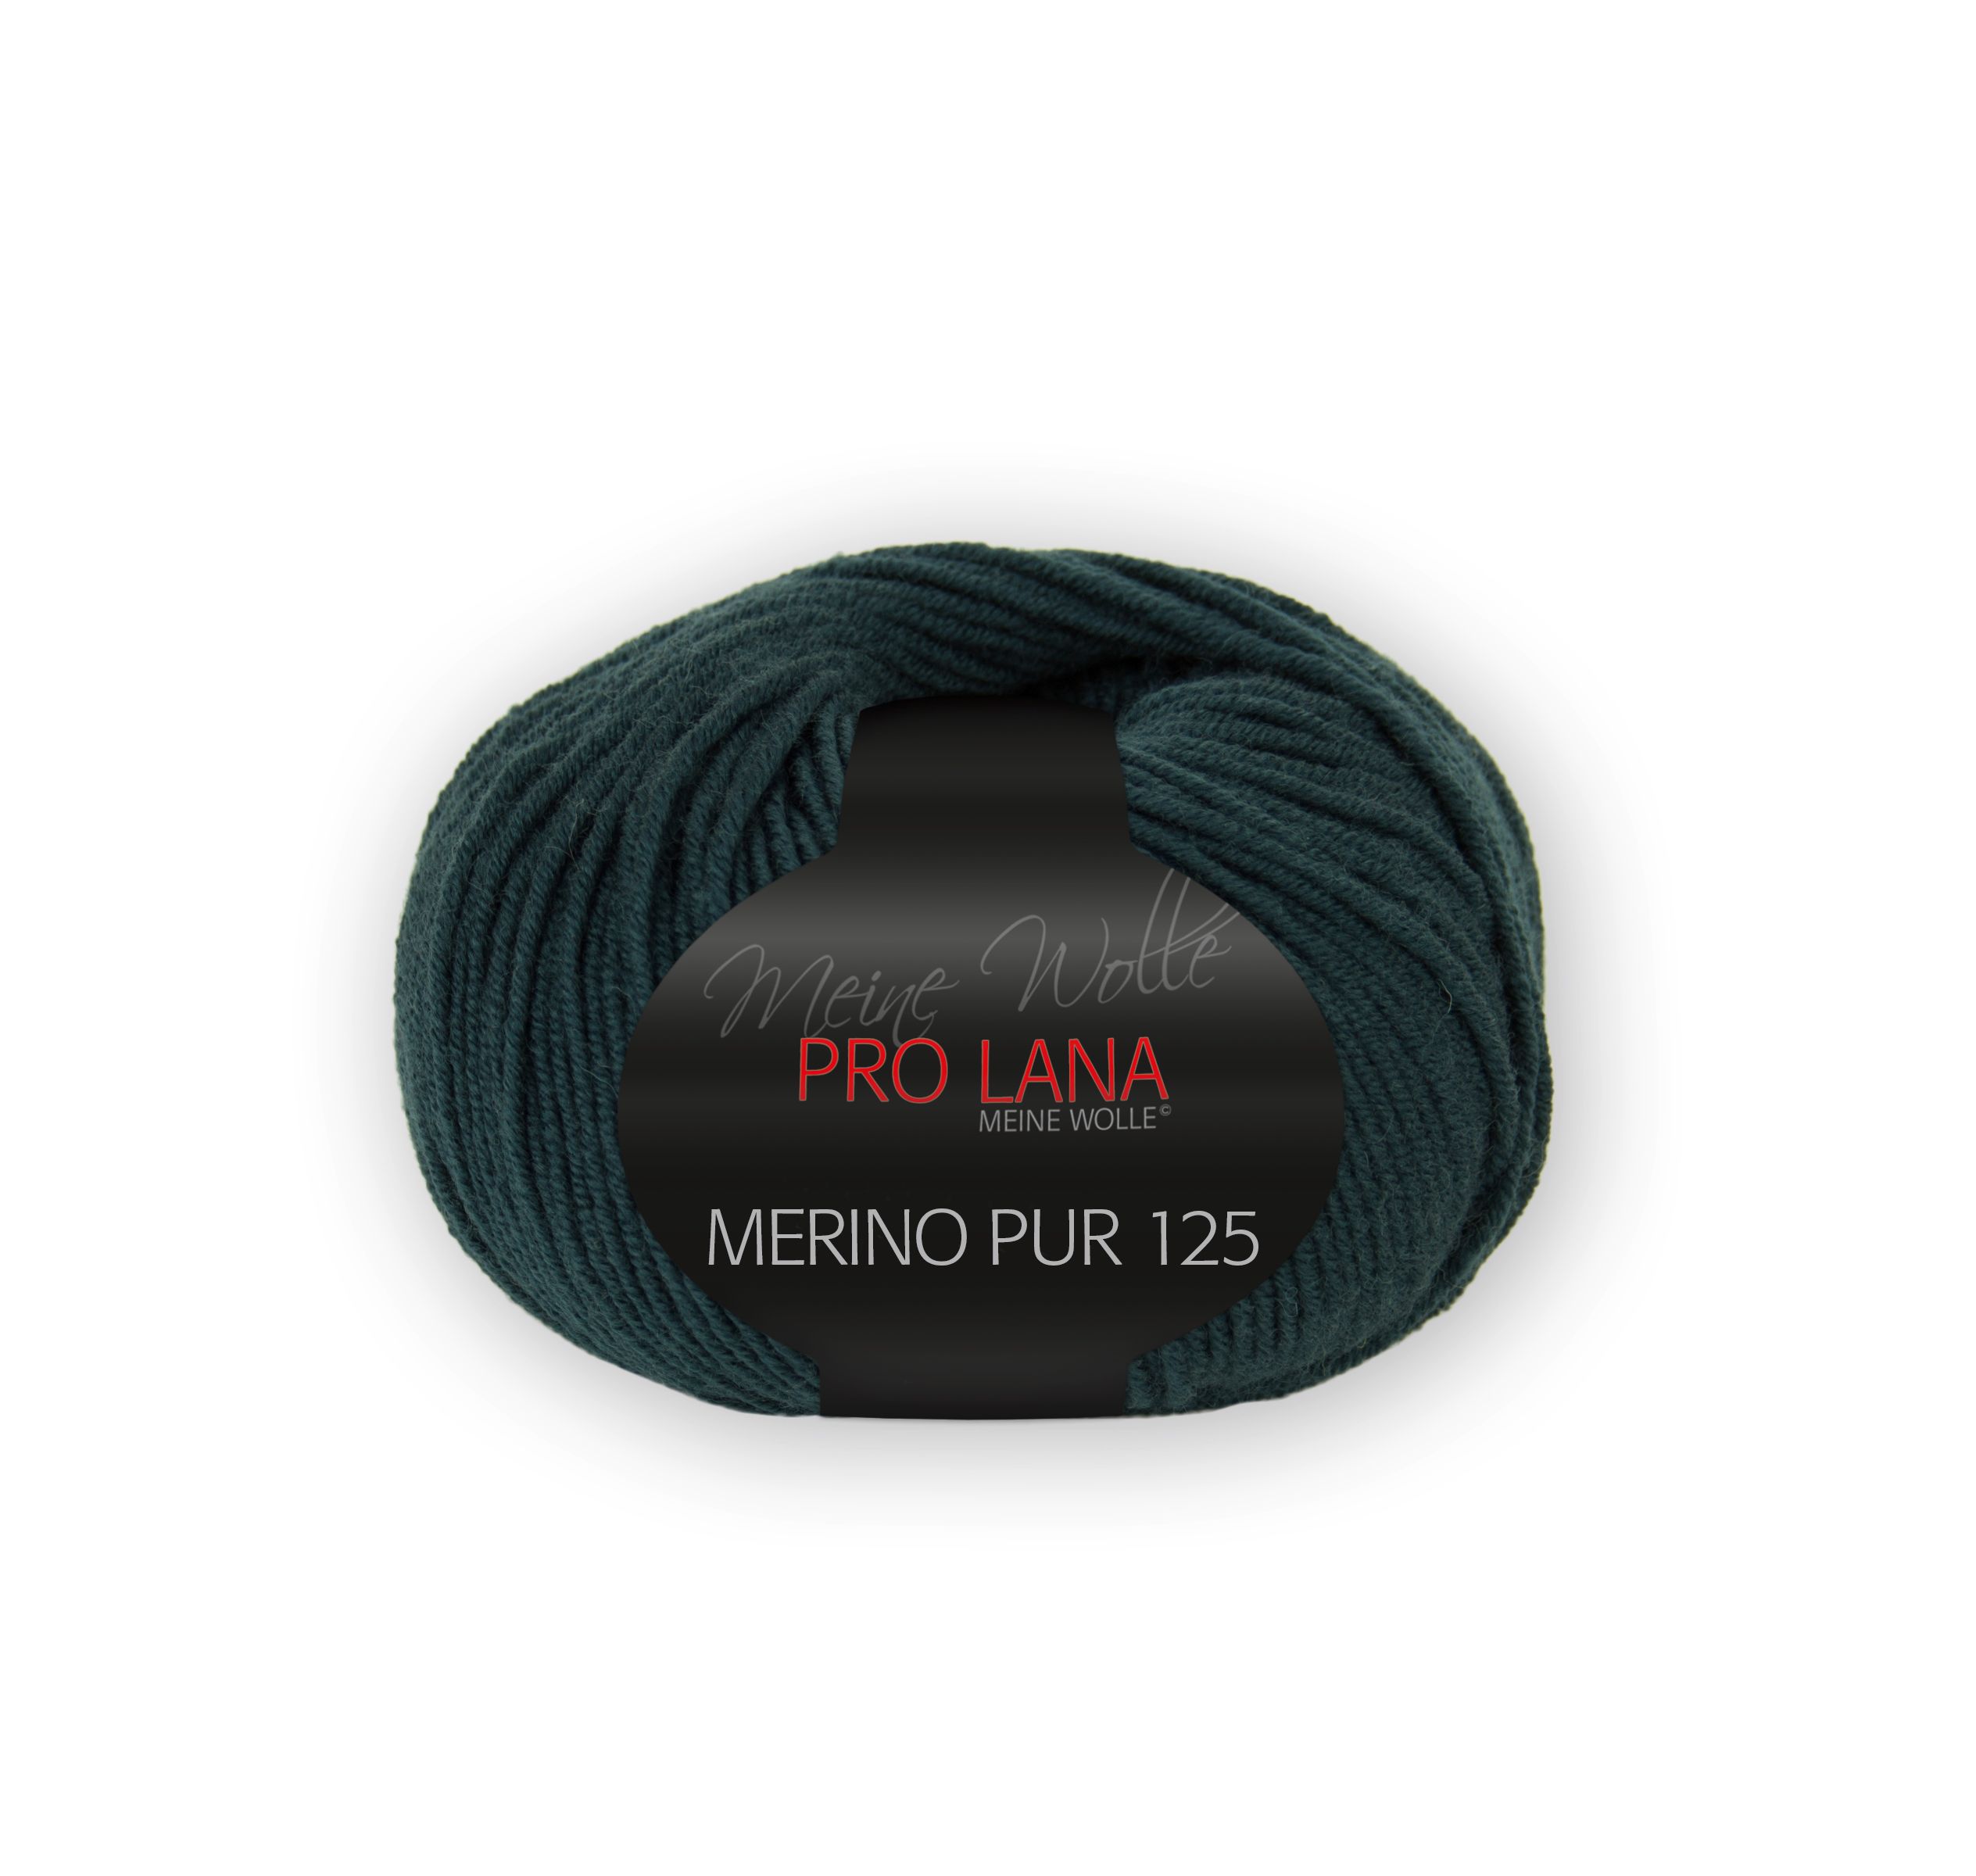 Pro Lana Merino Pur125 - Dunkelgrün 68